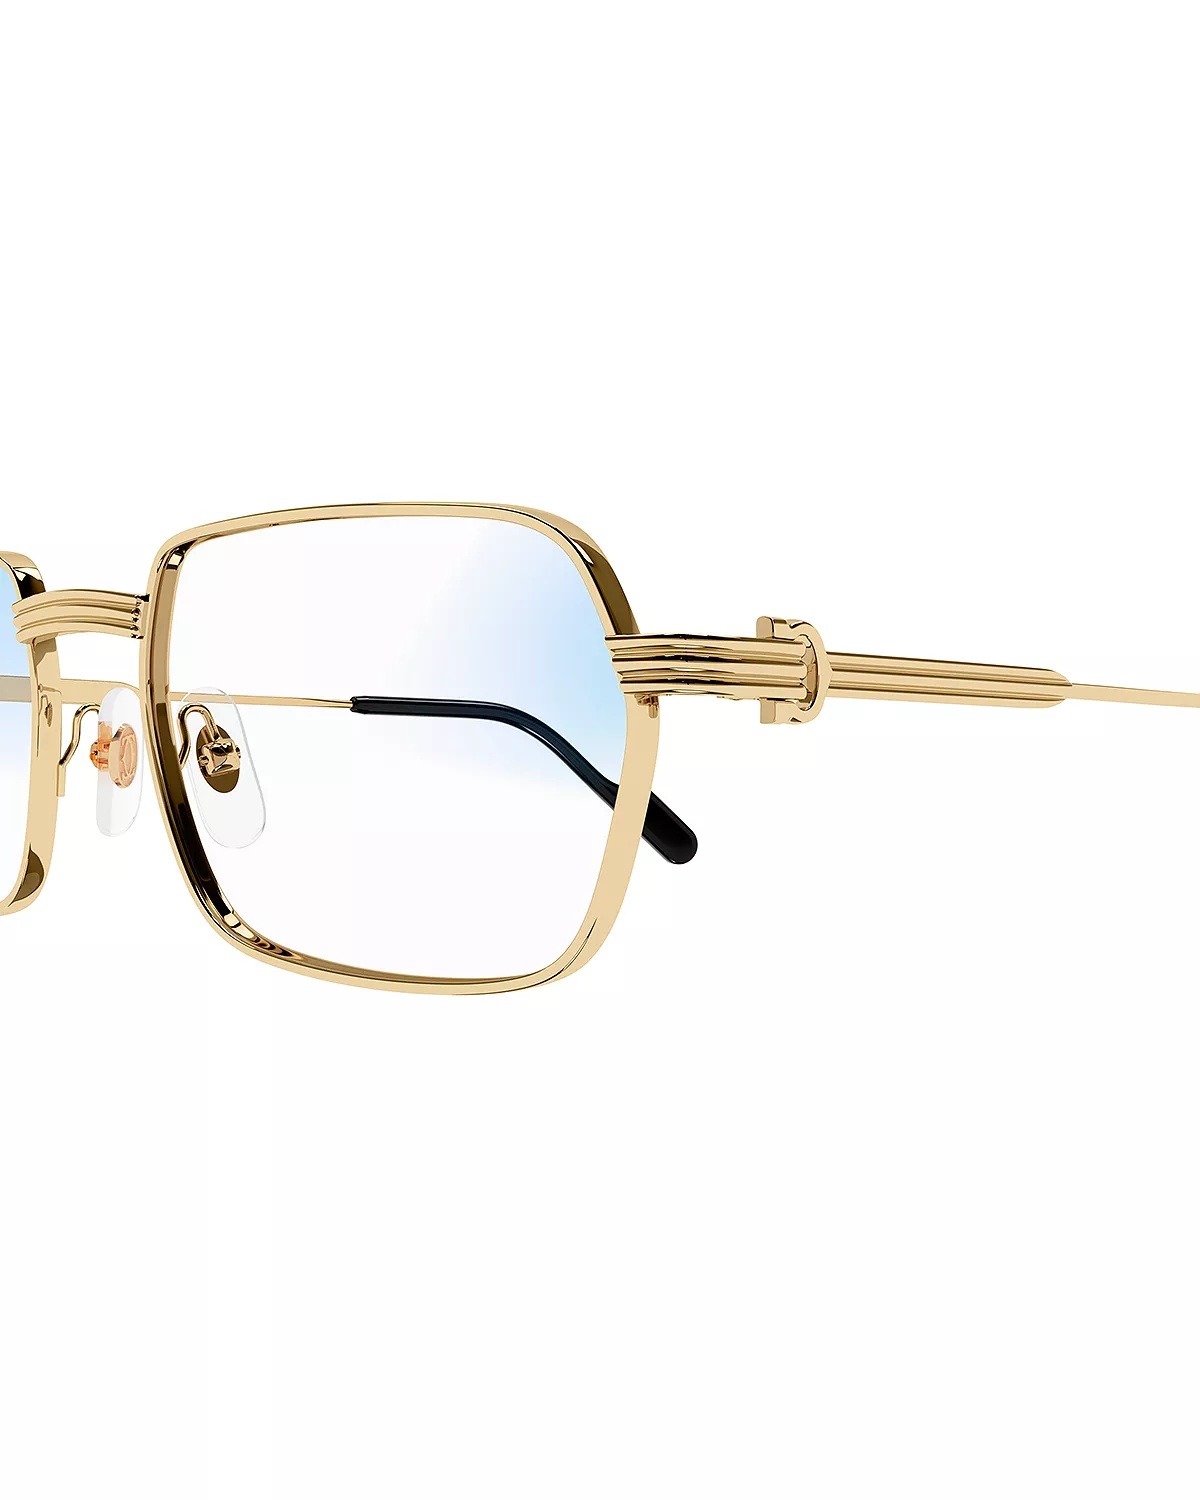 Premiere De Cartier 24 Carat Gold Plated Photochromatic Rectangular Sunglasses, 56mm - 7